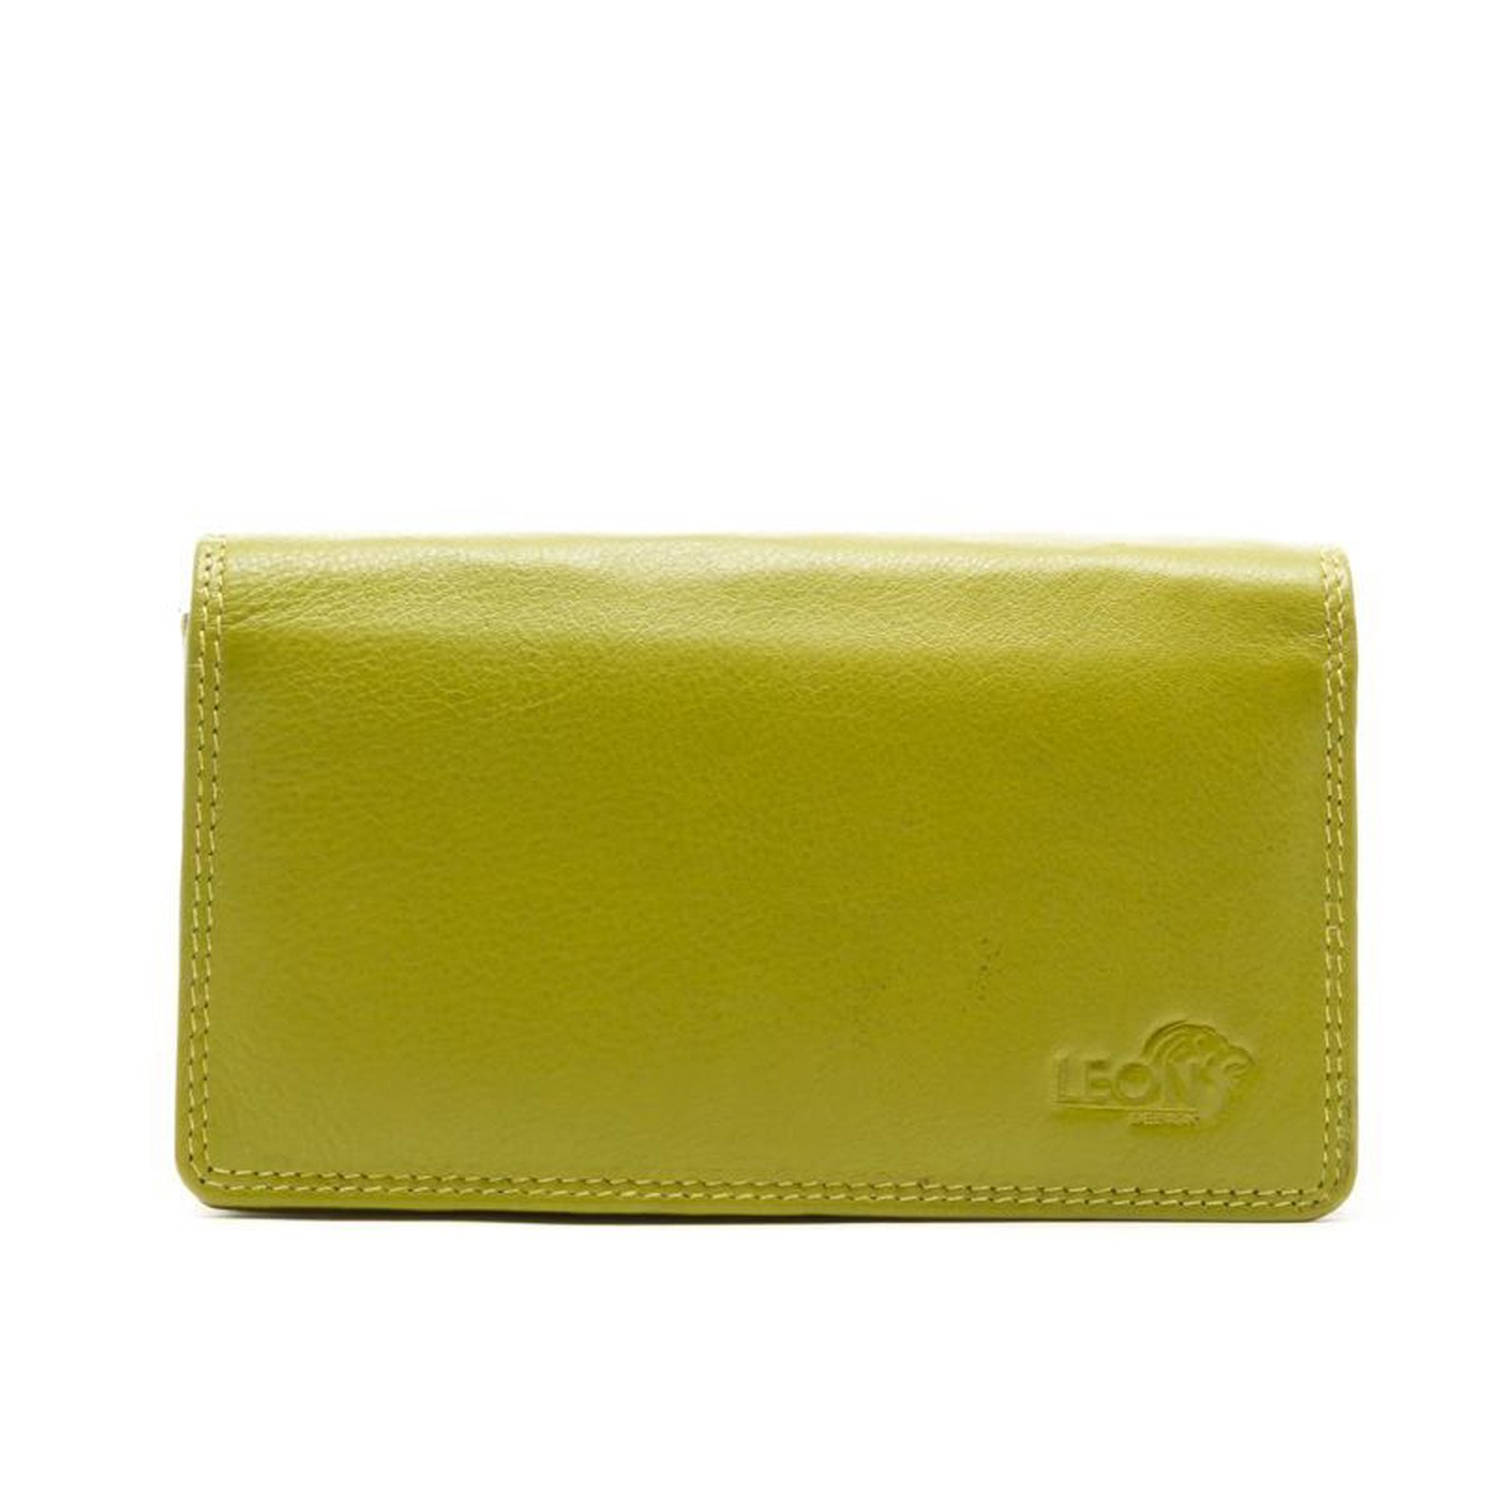 LeonDesign 16-W784-13 dames portemonnee groen leer